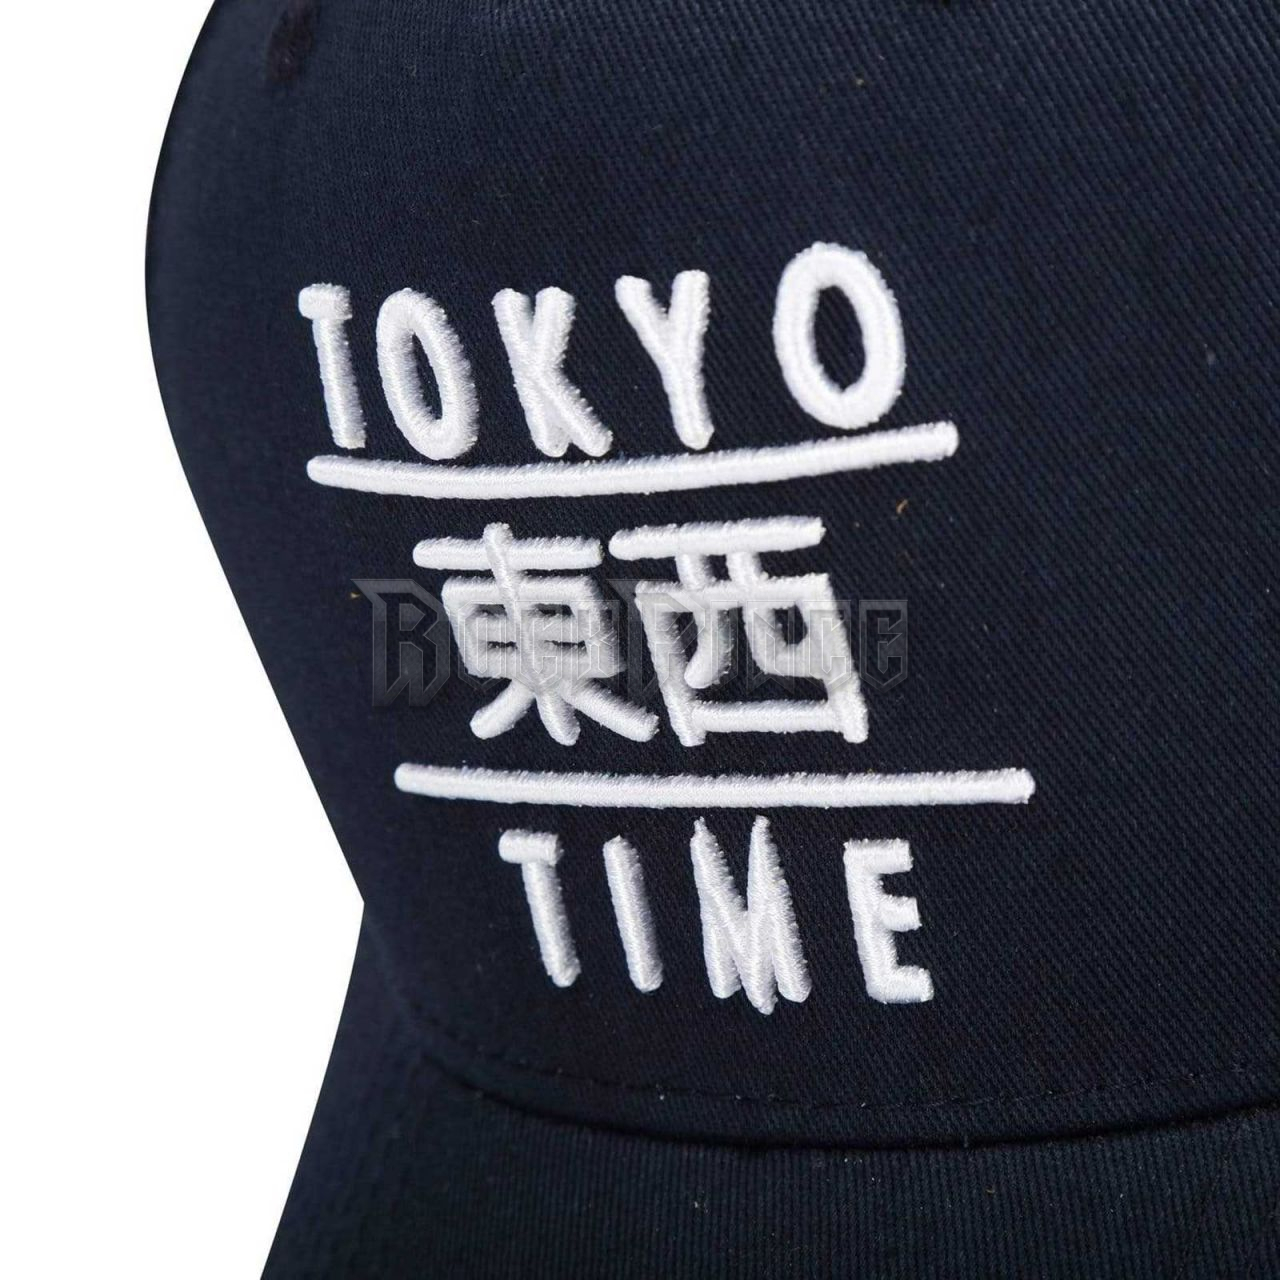 Tokyo Time - TT Heritage White Logo - snapback sapka - TOKYOSBCAP58N